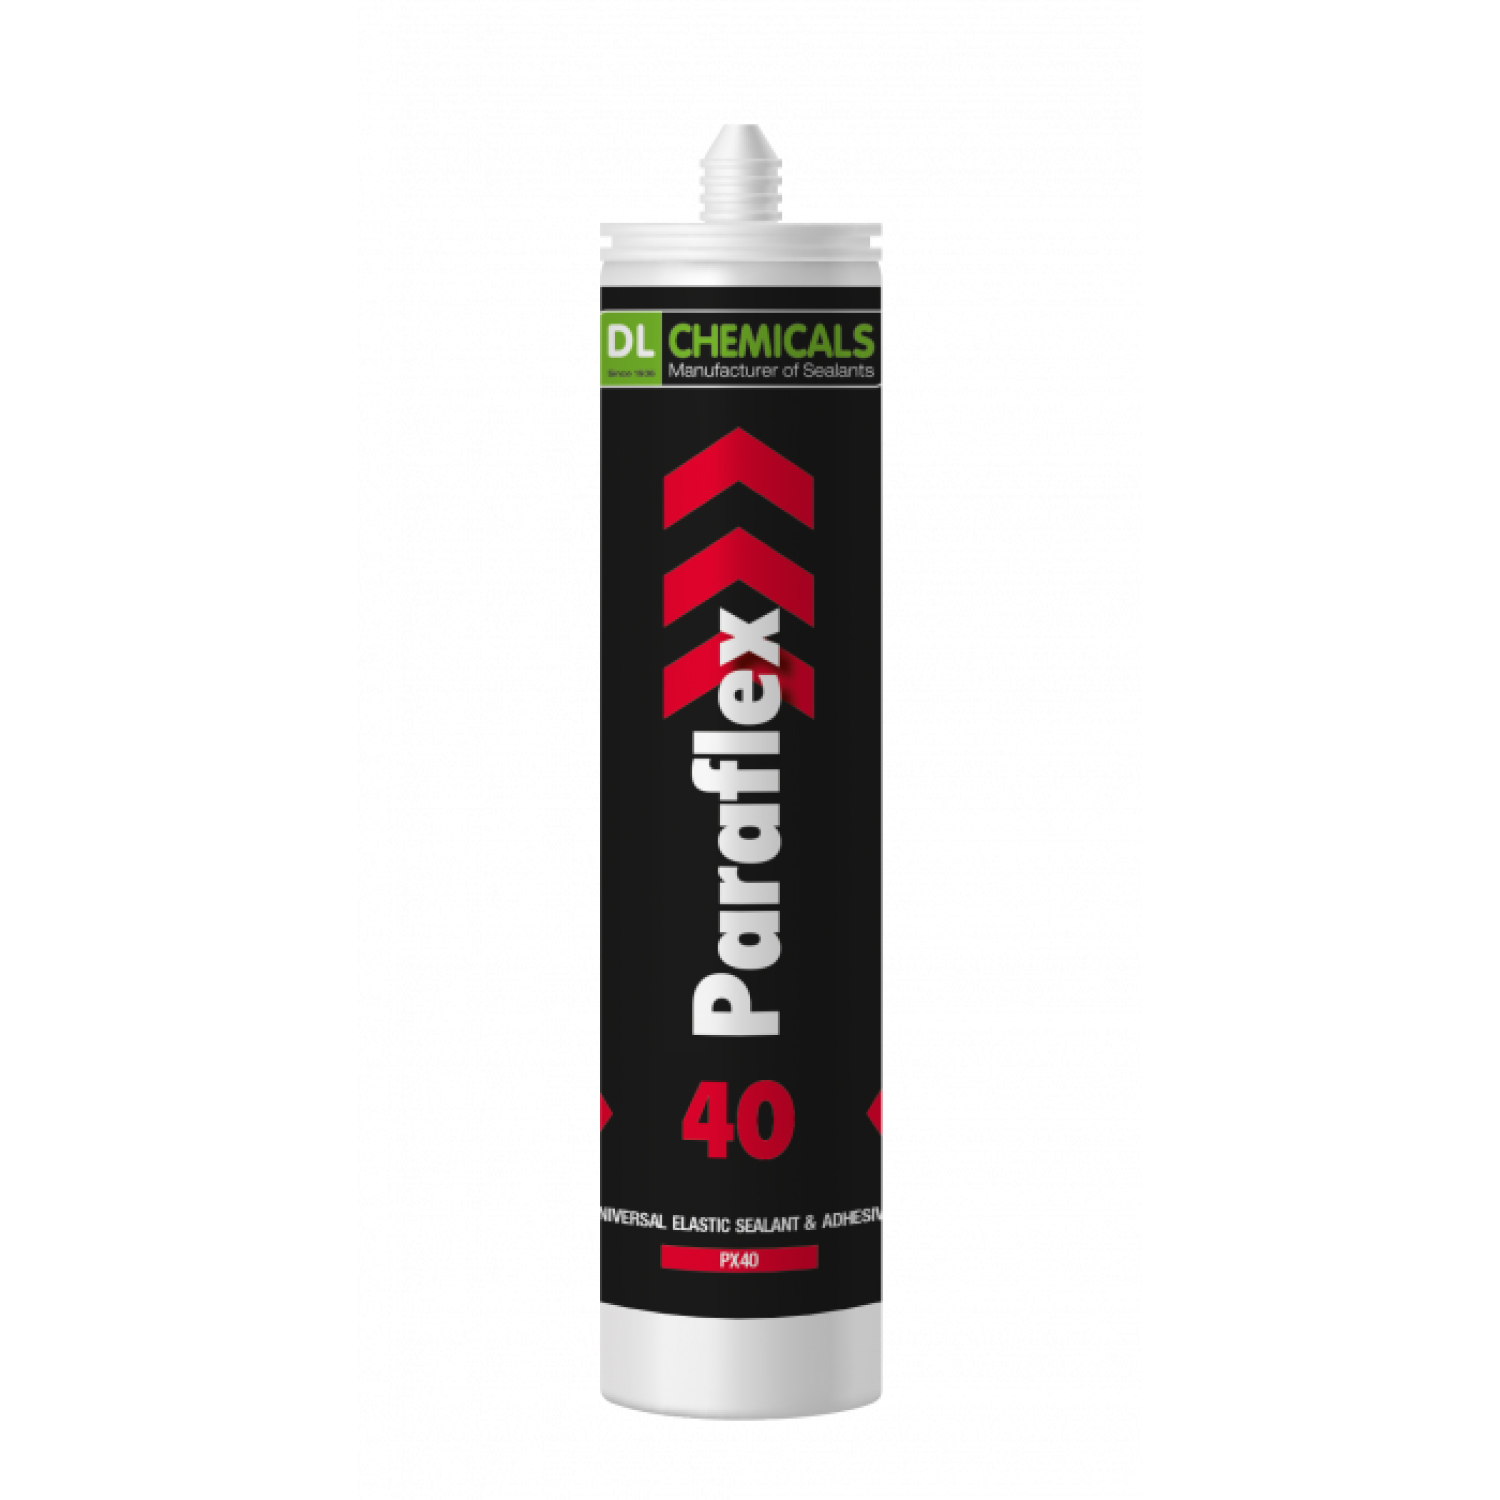 paraflex-40-dl-chemicals